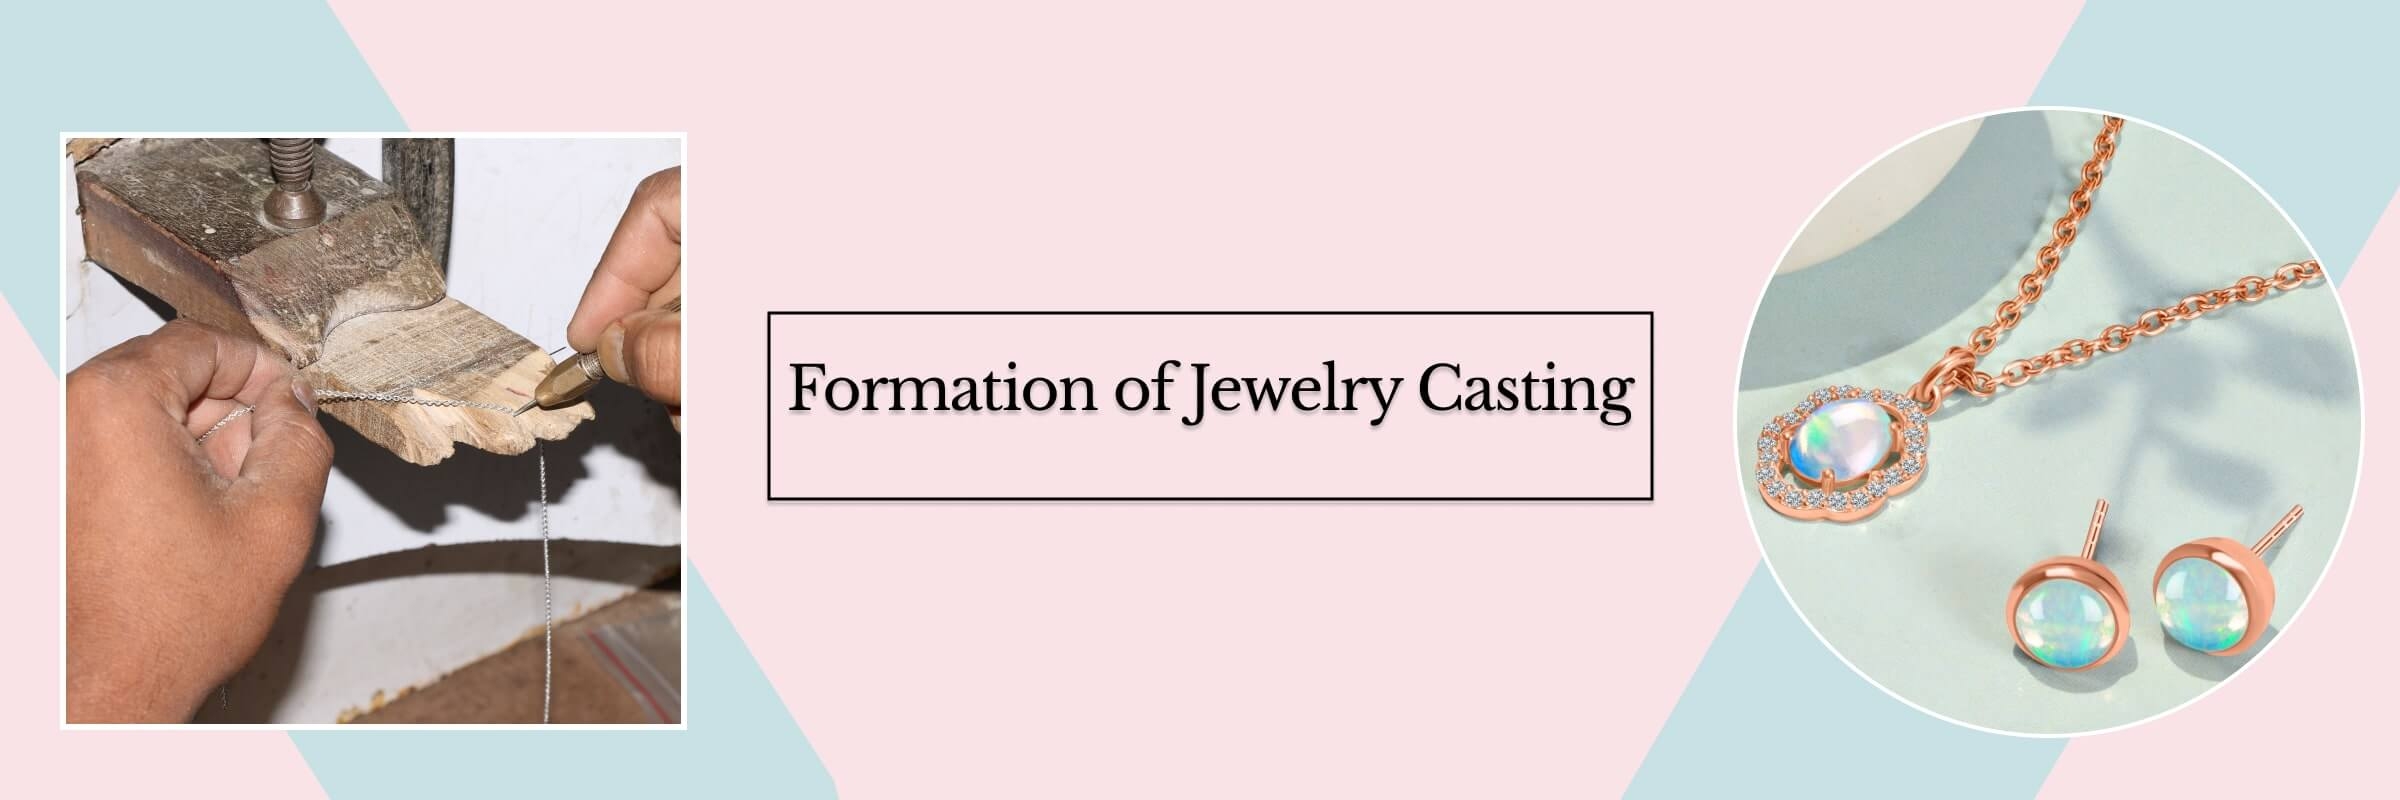 Jewelry casting process